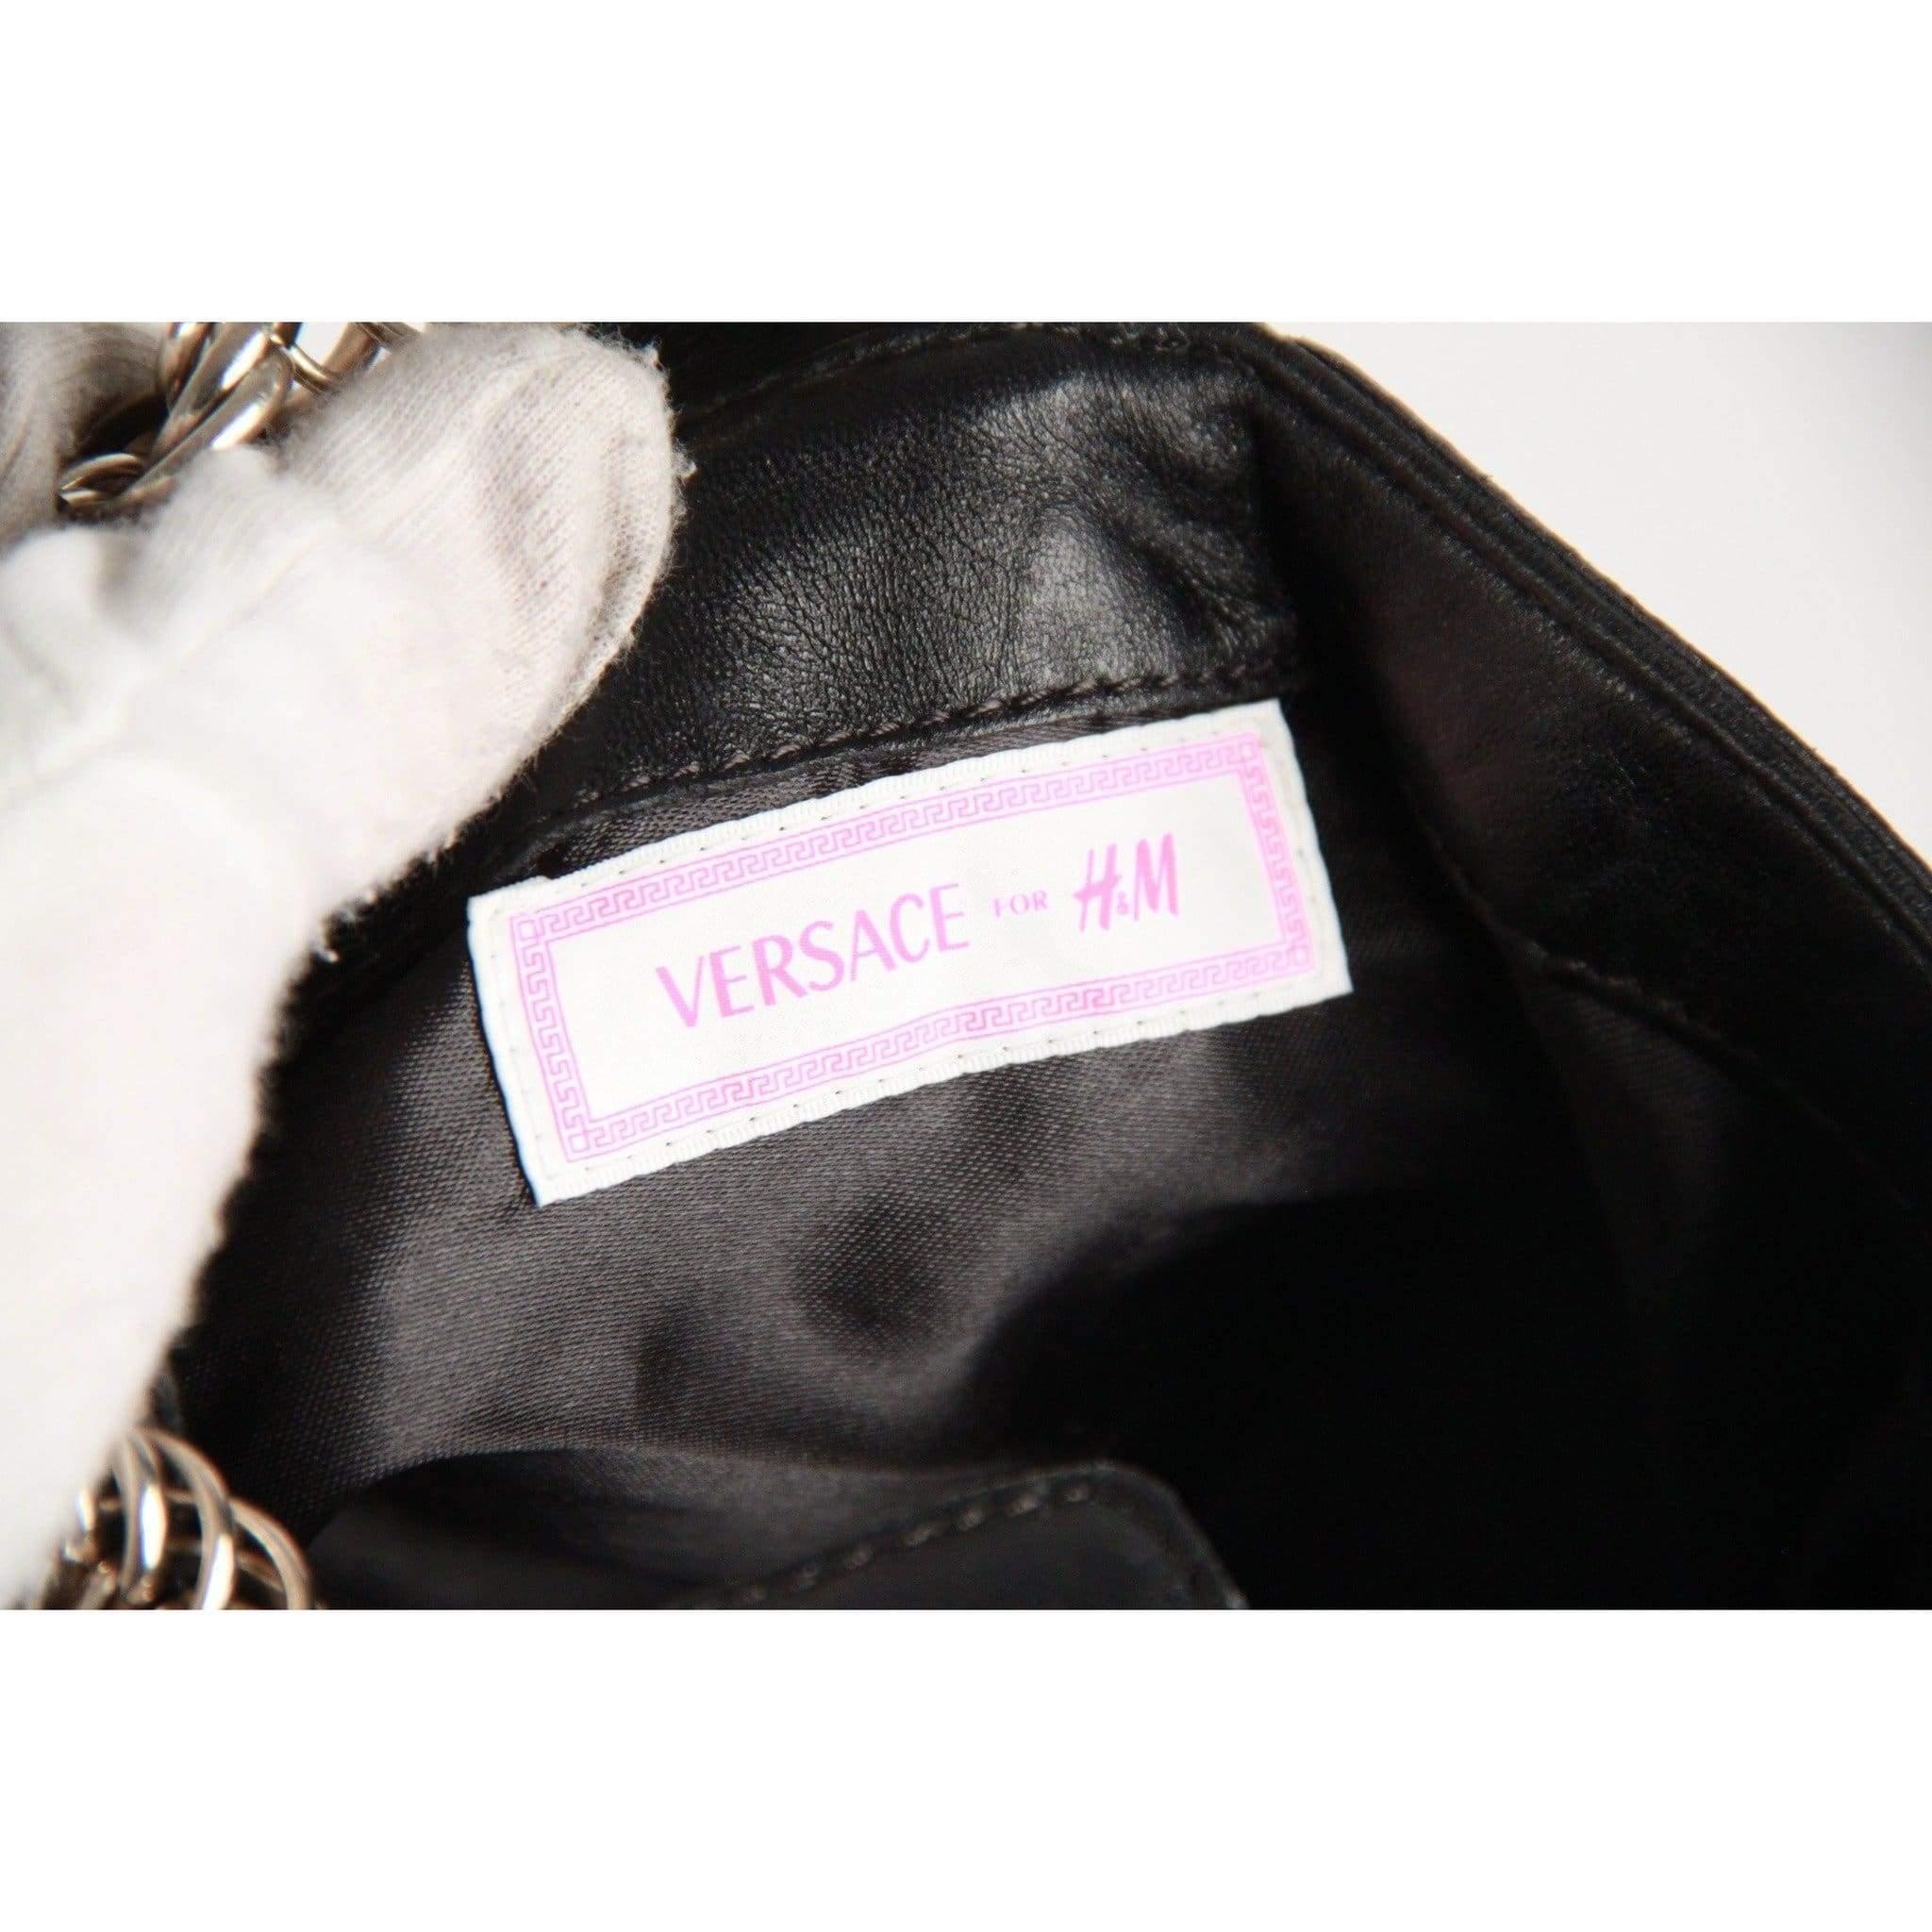 versace hm bag